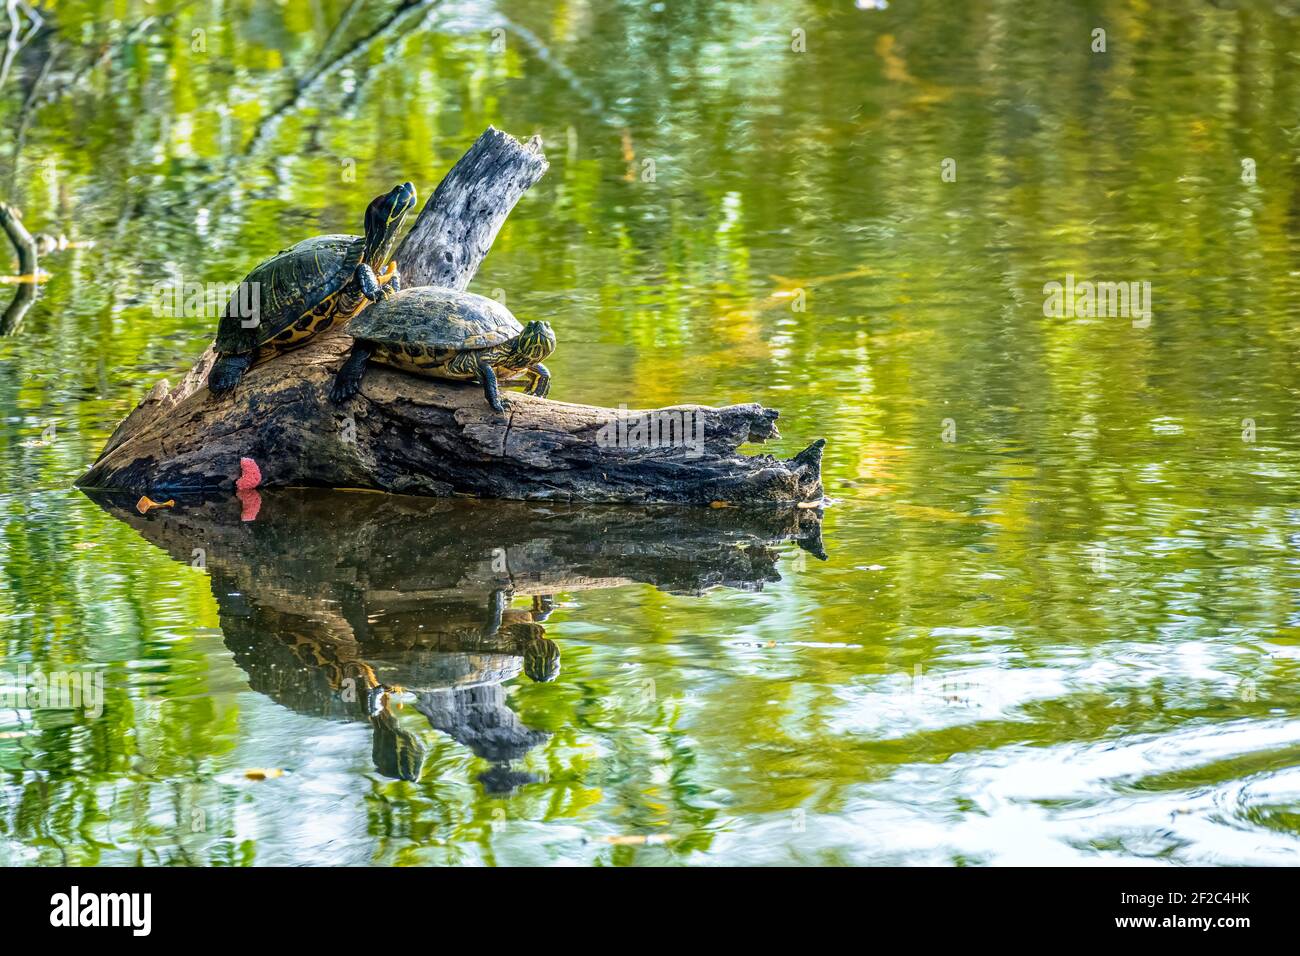 Dos tortugas de la Florida, también conocidas como cooters de llanura costera (Pseudemys concinna floridana) en un tronco en un lago verde - Long Key Natural Area, Davie, Florid Foto de stock